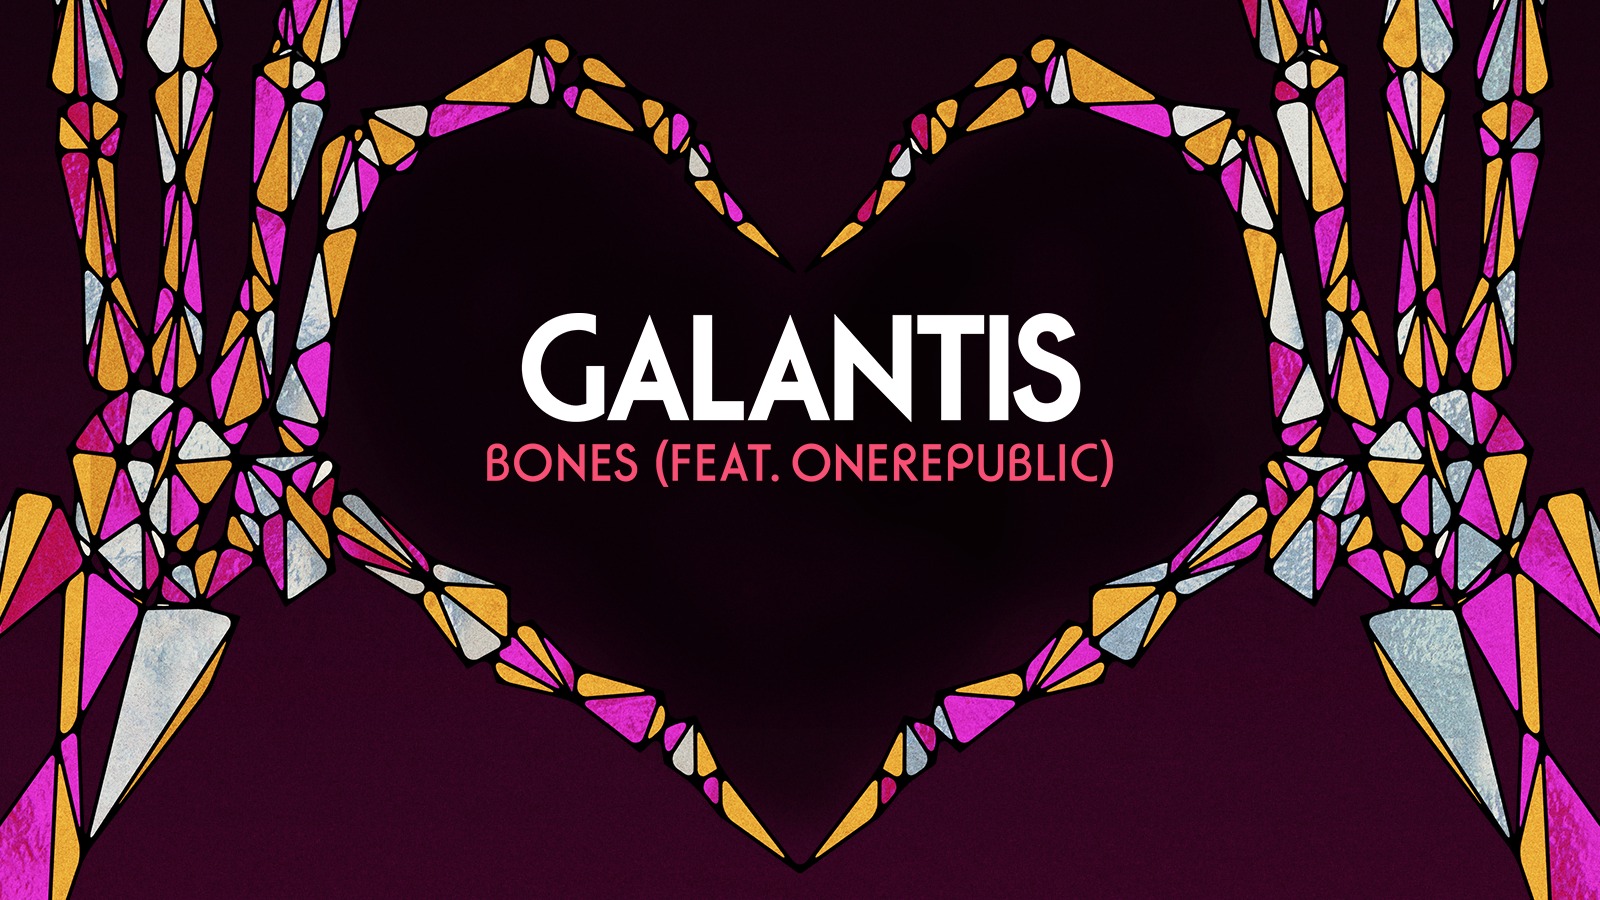 Galantis Bones - Galantis Bones Feat Onerepublic , HD Wallpaper & Backgrounds